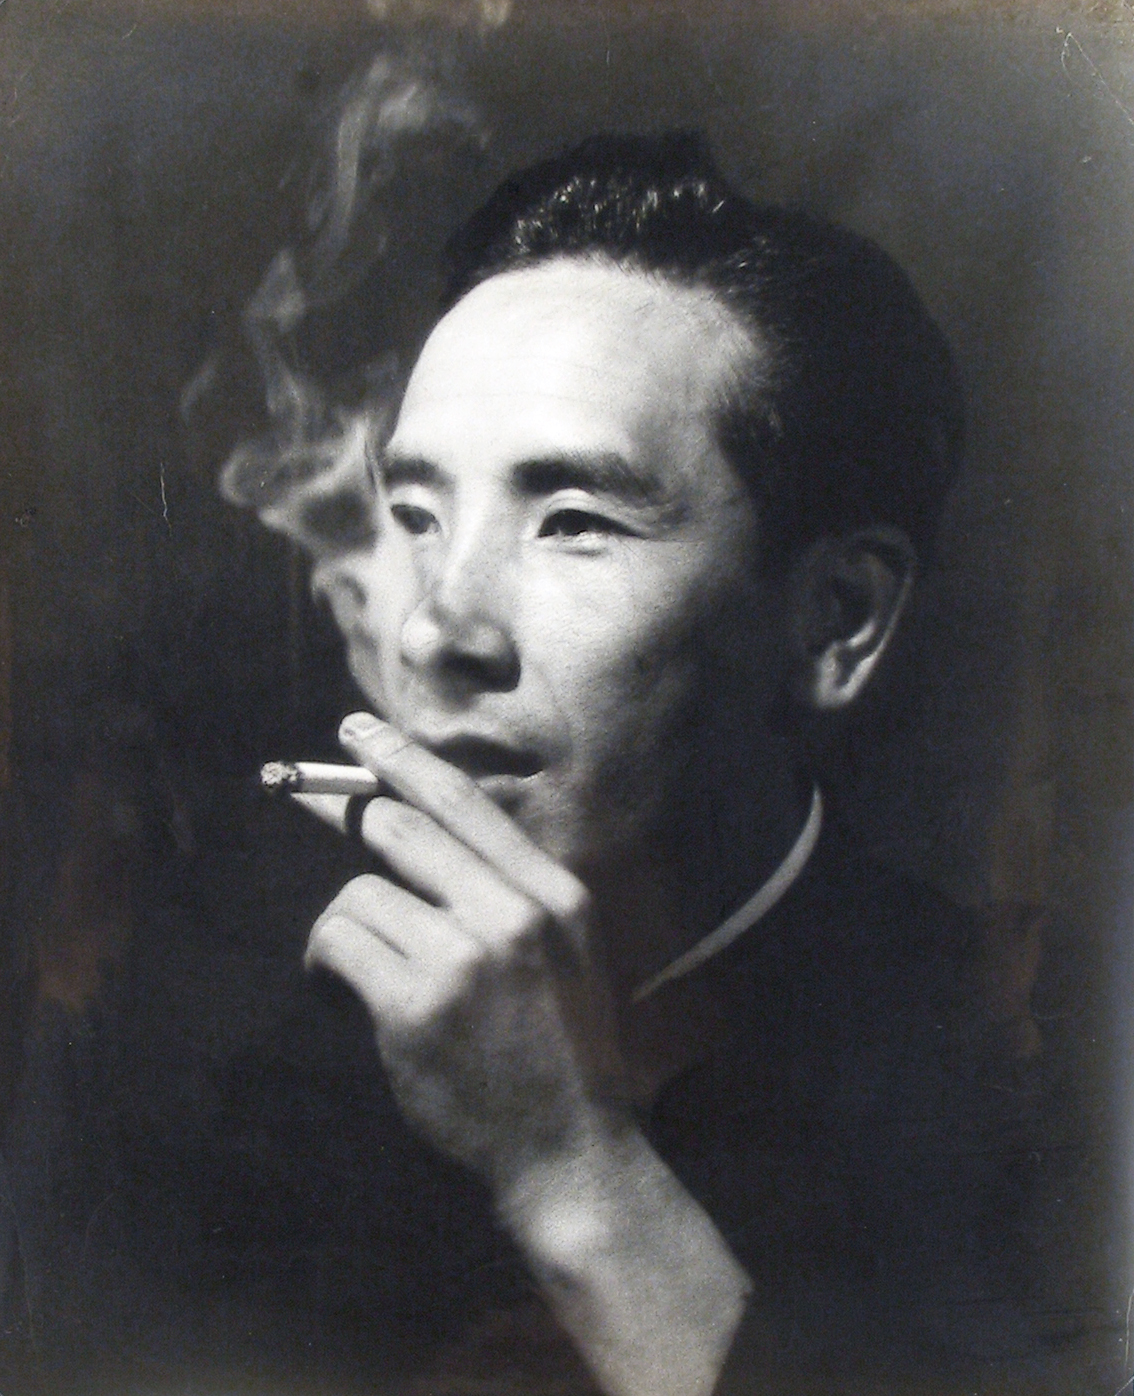 Untitled (portrait of man smoking)